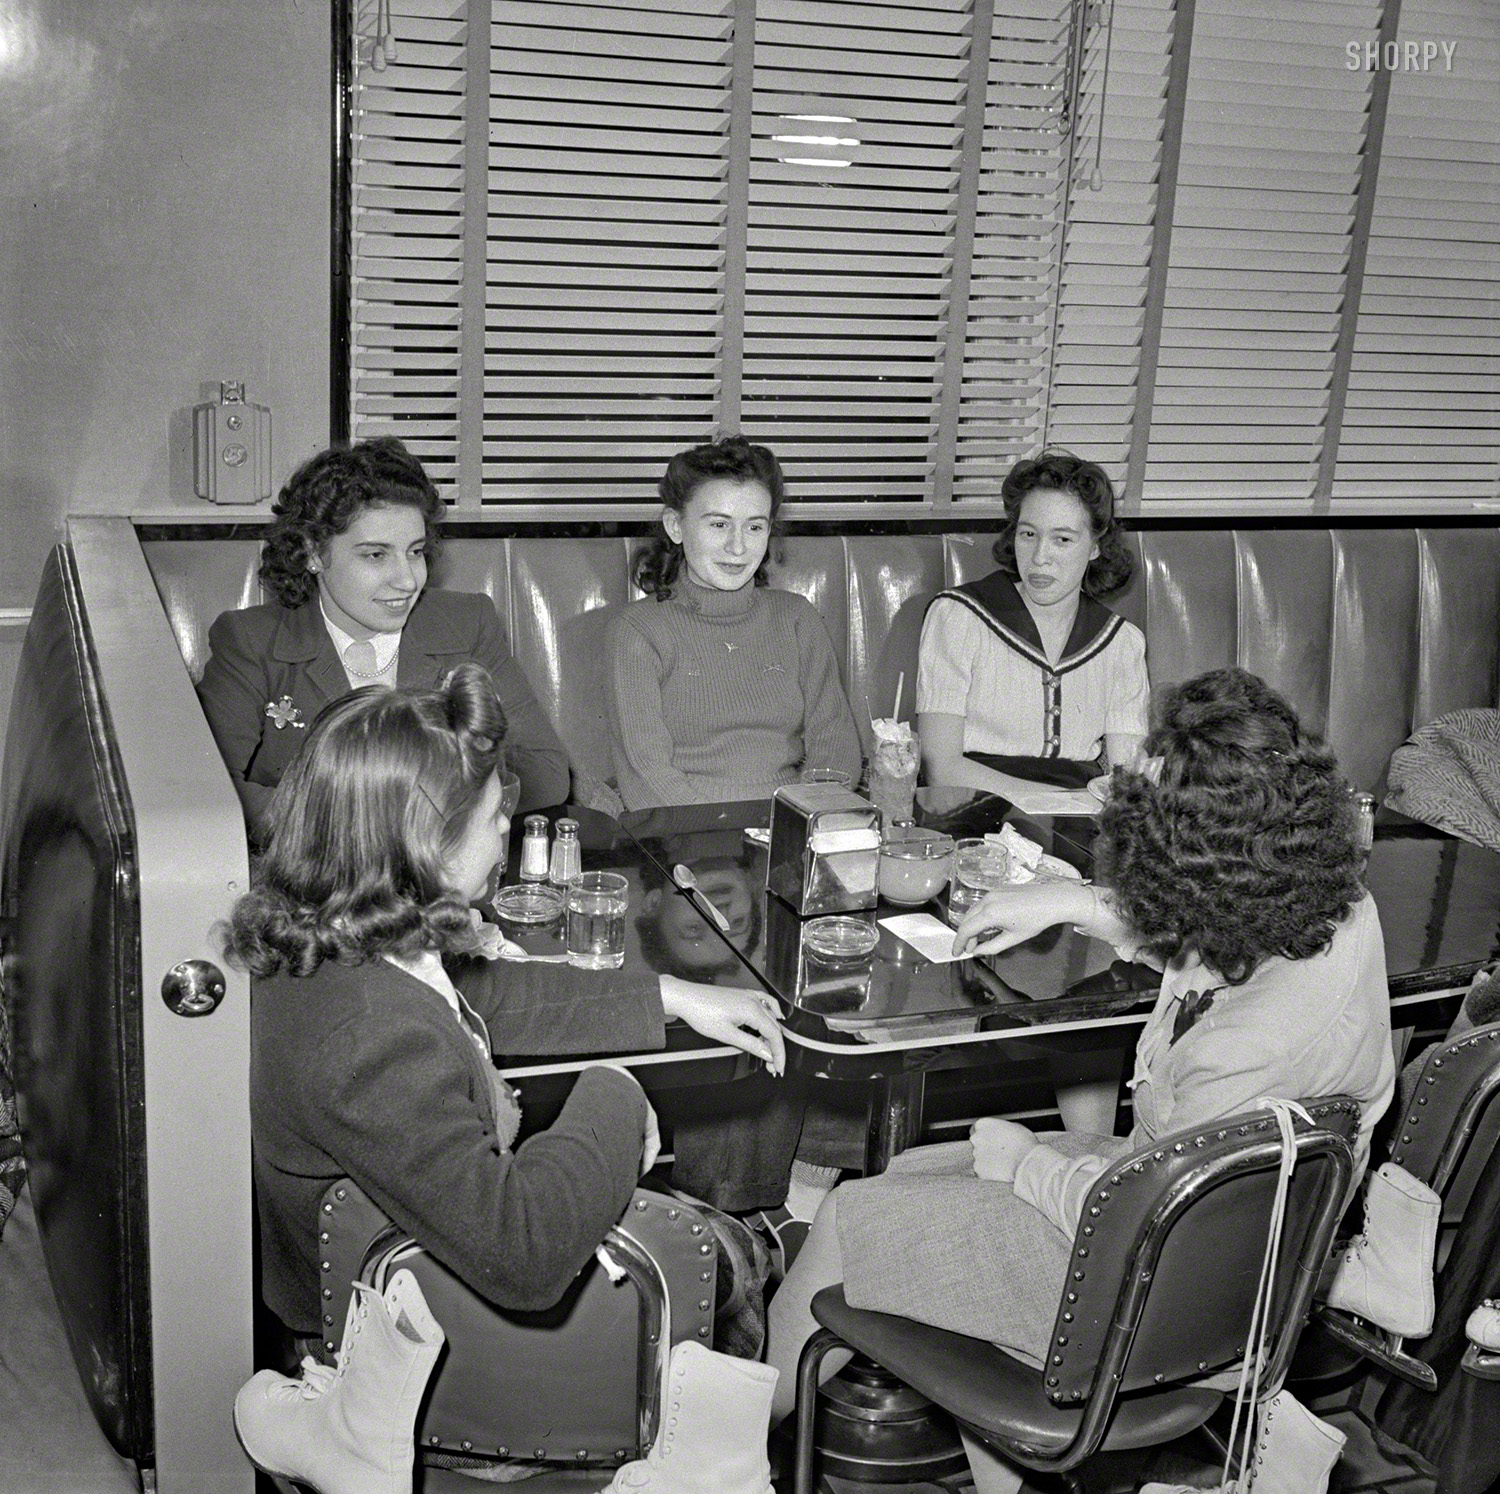 December 1941. Washington, D.C. "Girls in Hot Shoppes restaurant." Medium format negative by John Collier, Office of War Information. View full size.